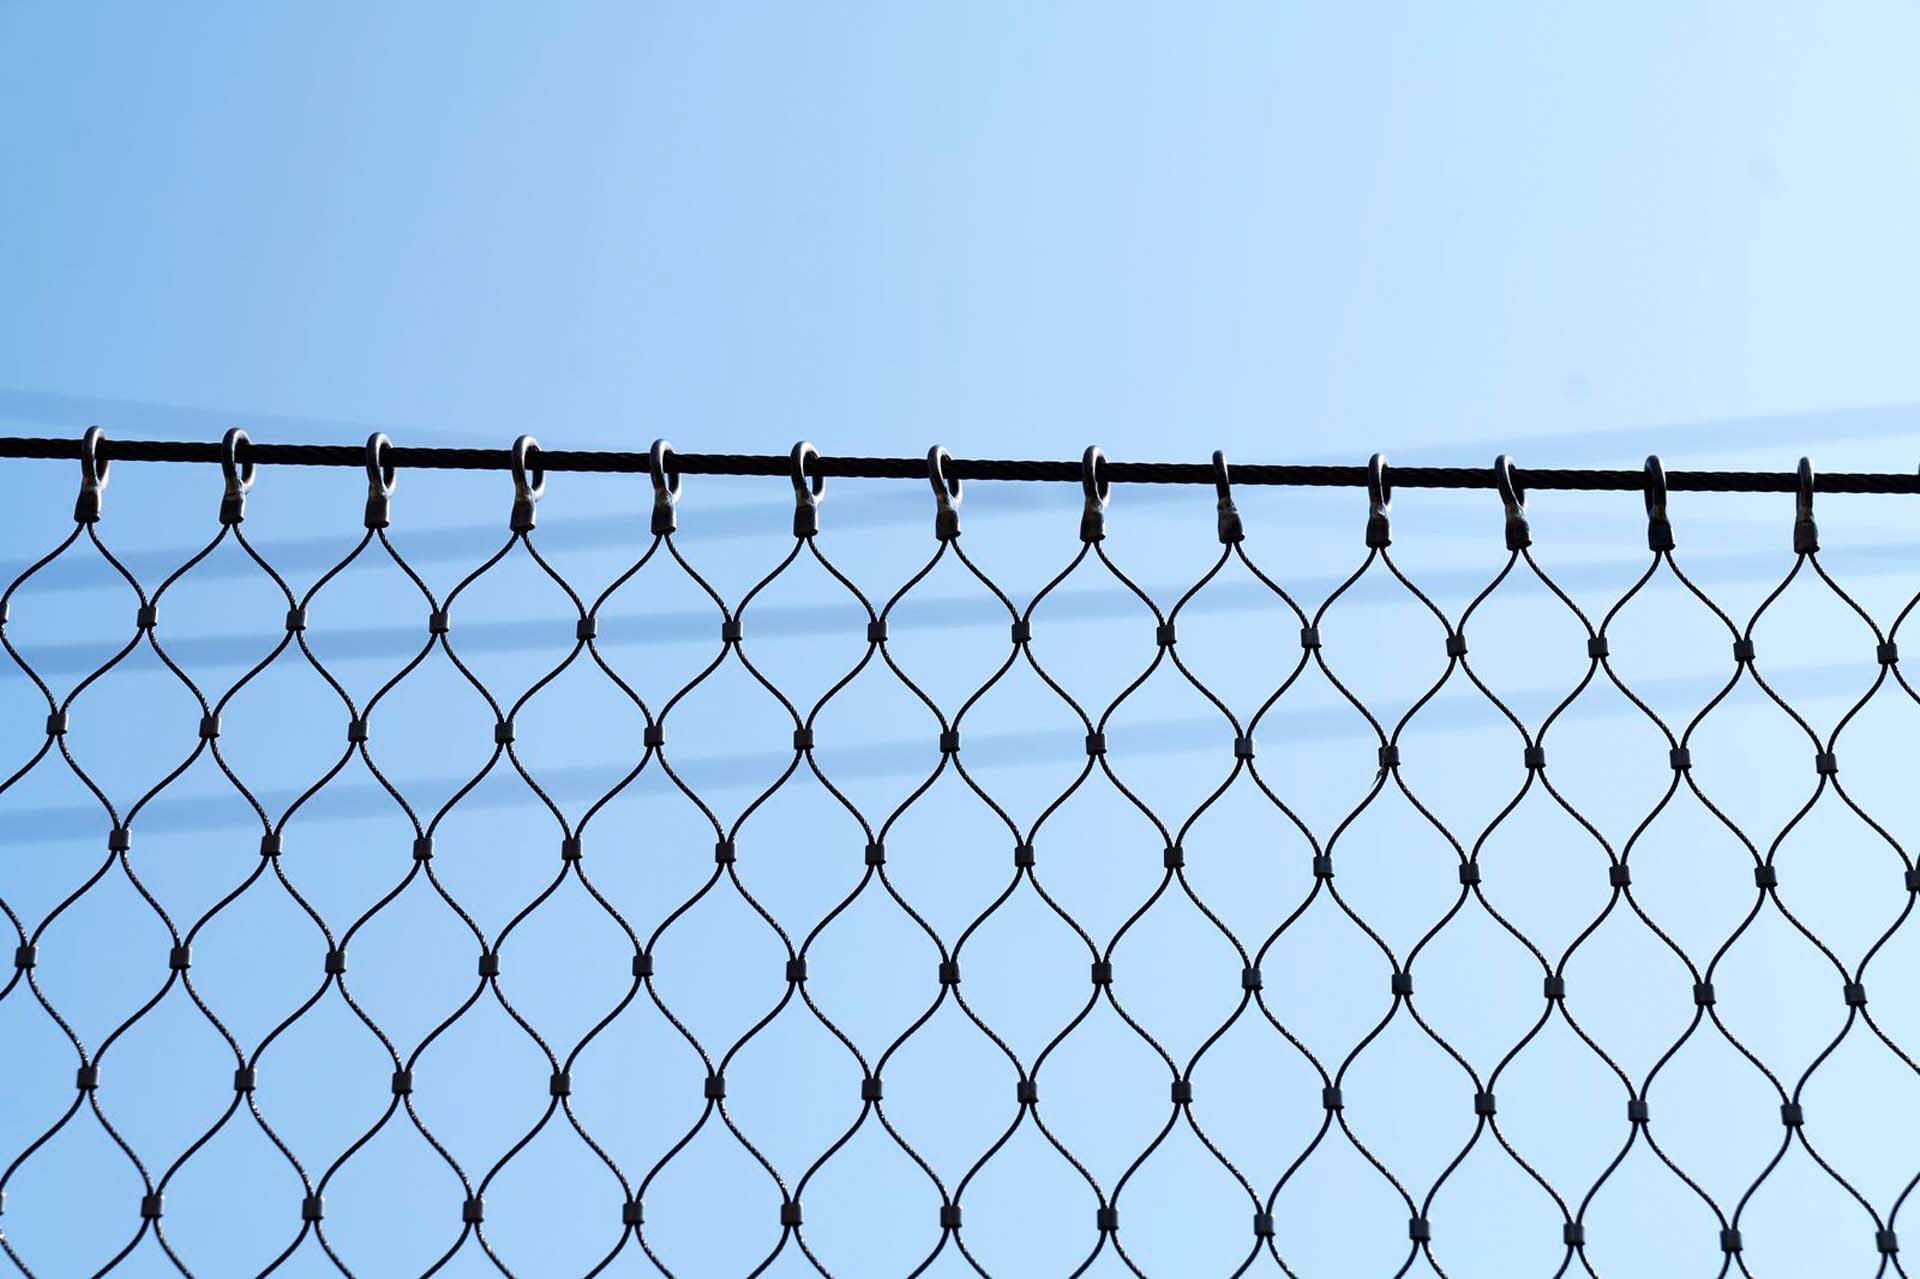 Webnet railway security fence